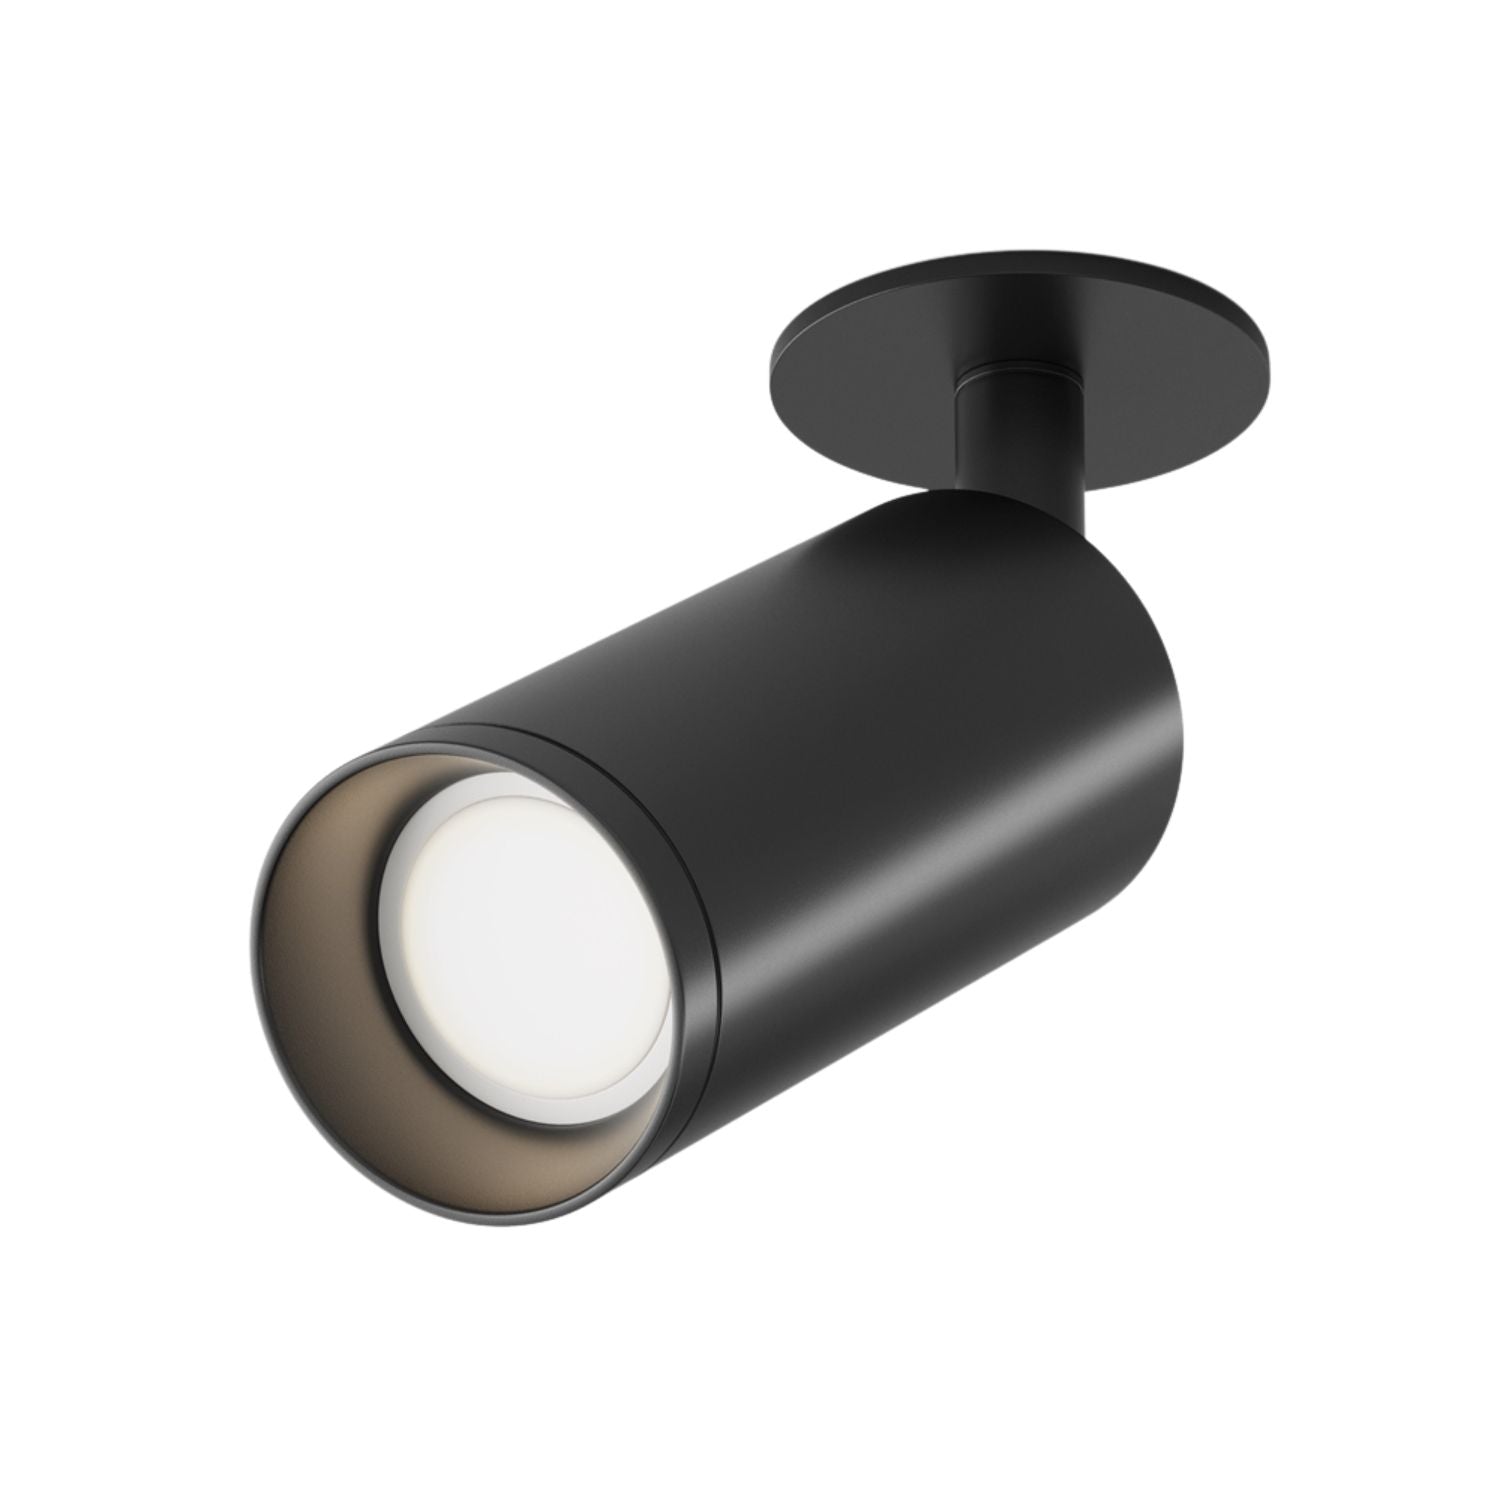 FOCUS - Adjustable gold, white or black wall spotlight